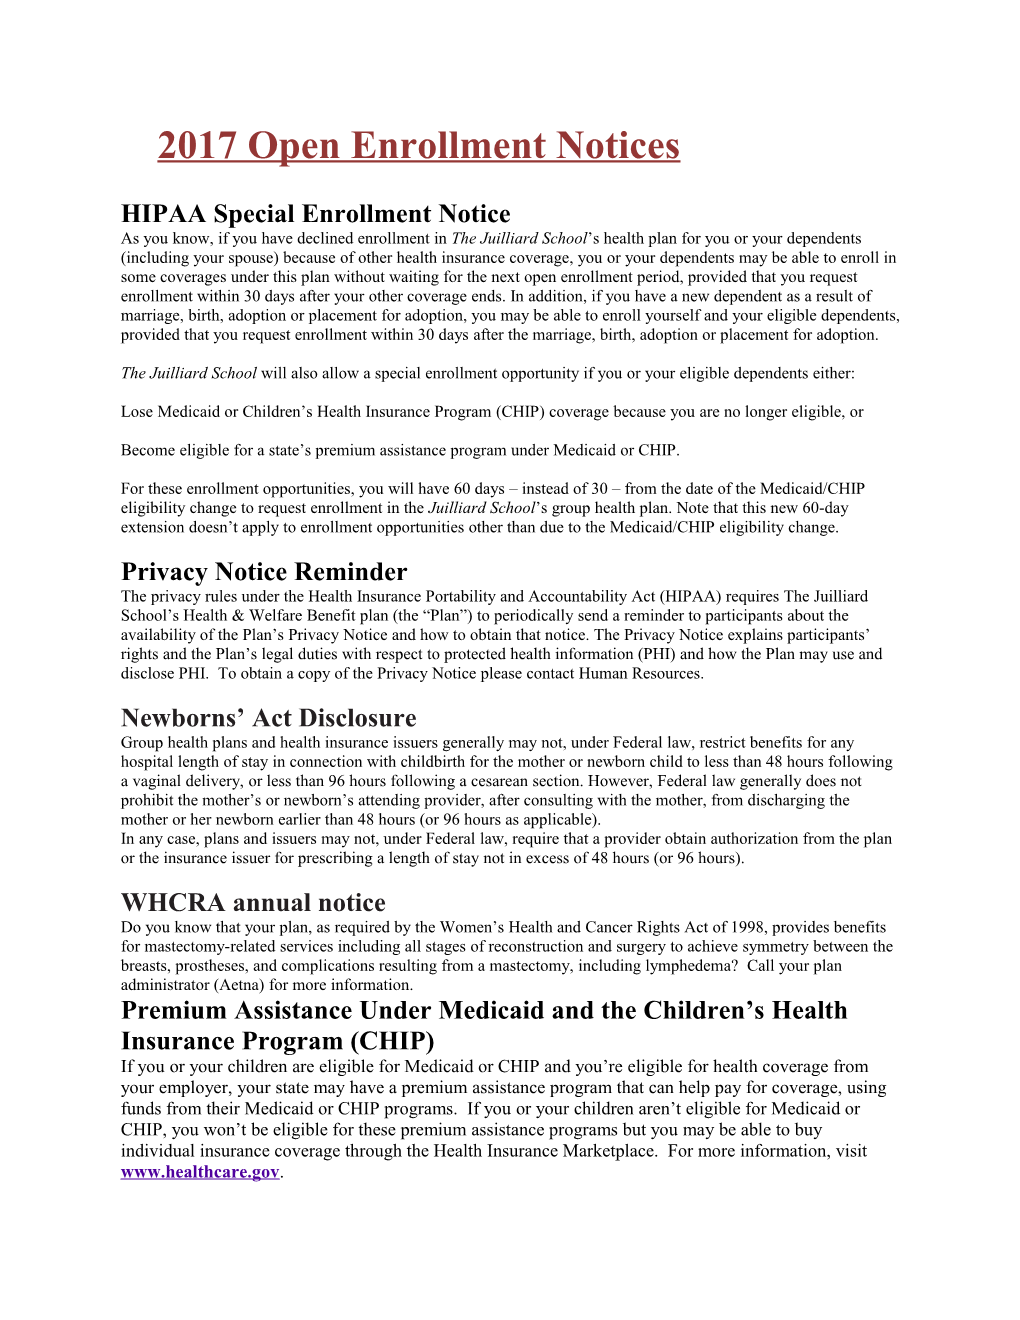 HIPAA Special Enrollment Notice